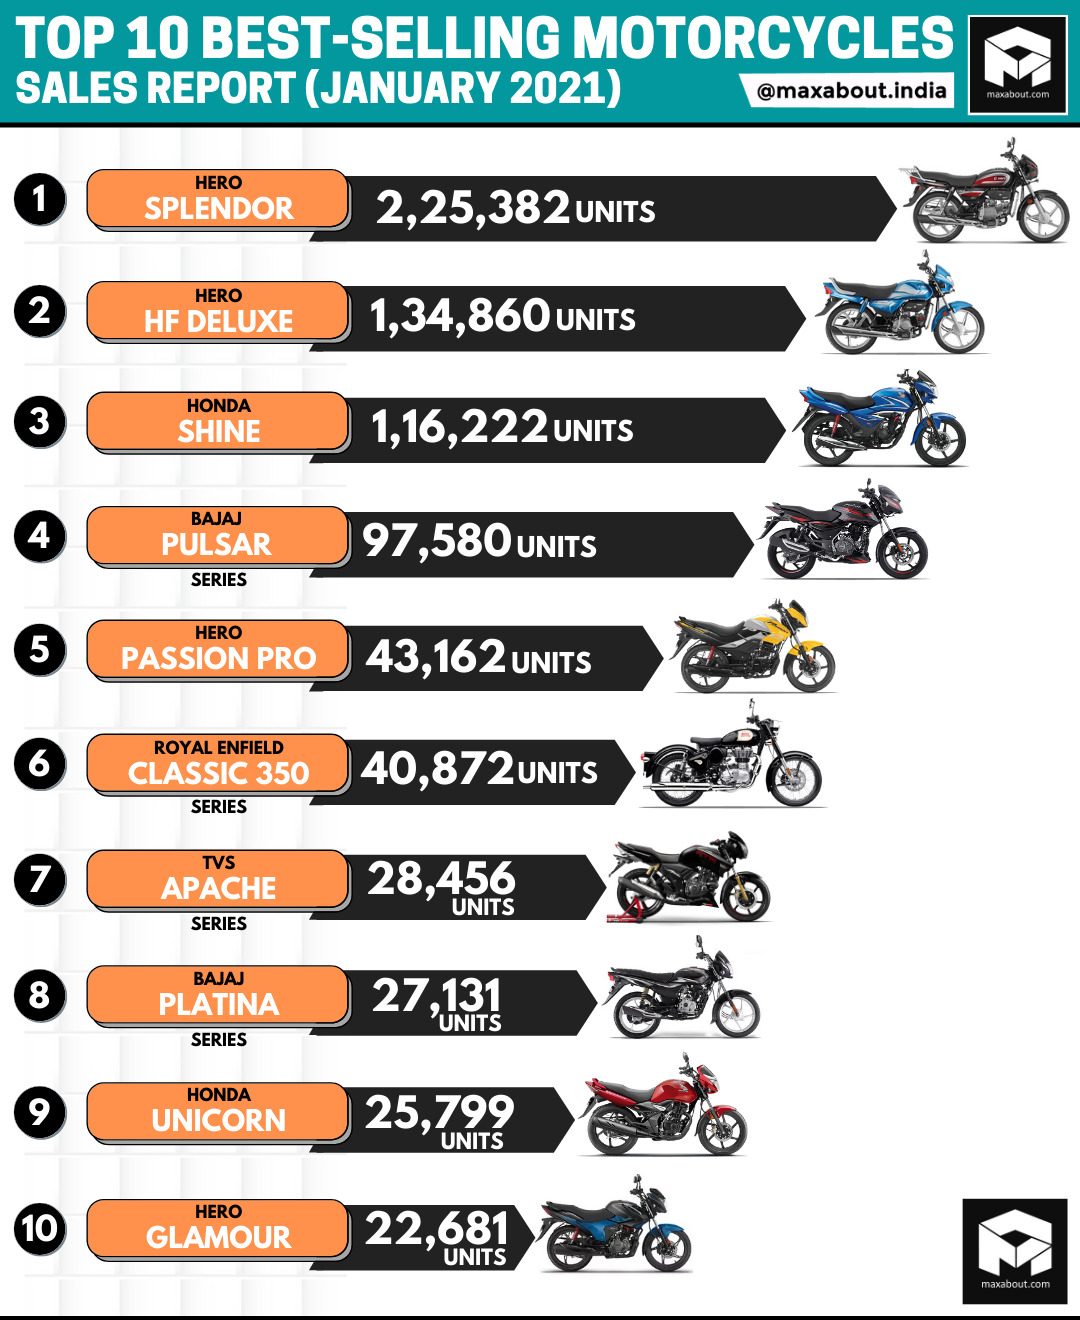 https://ic.maxabout.us//misc/infographics/bike-infographics/motorcycle-sales-reports//Top-10-Bikes-Jan-2021.jpg